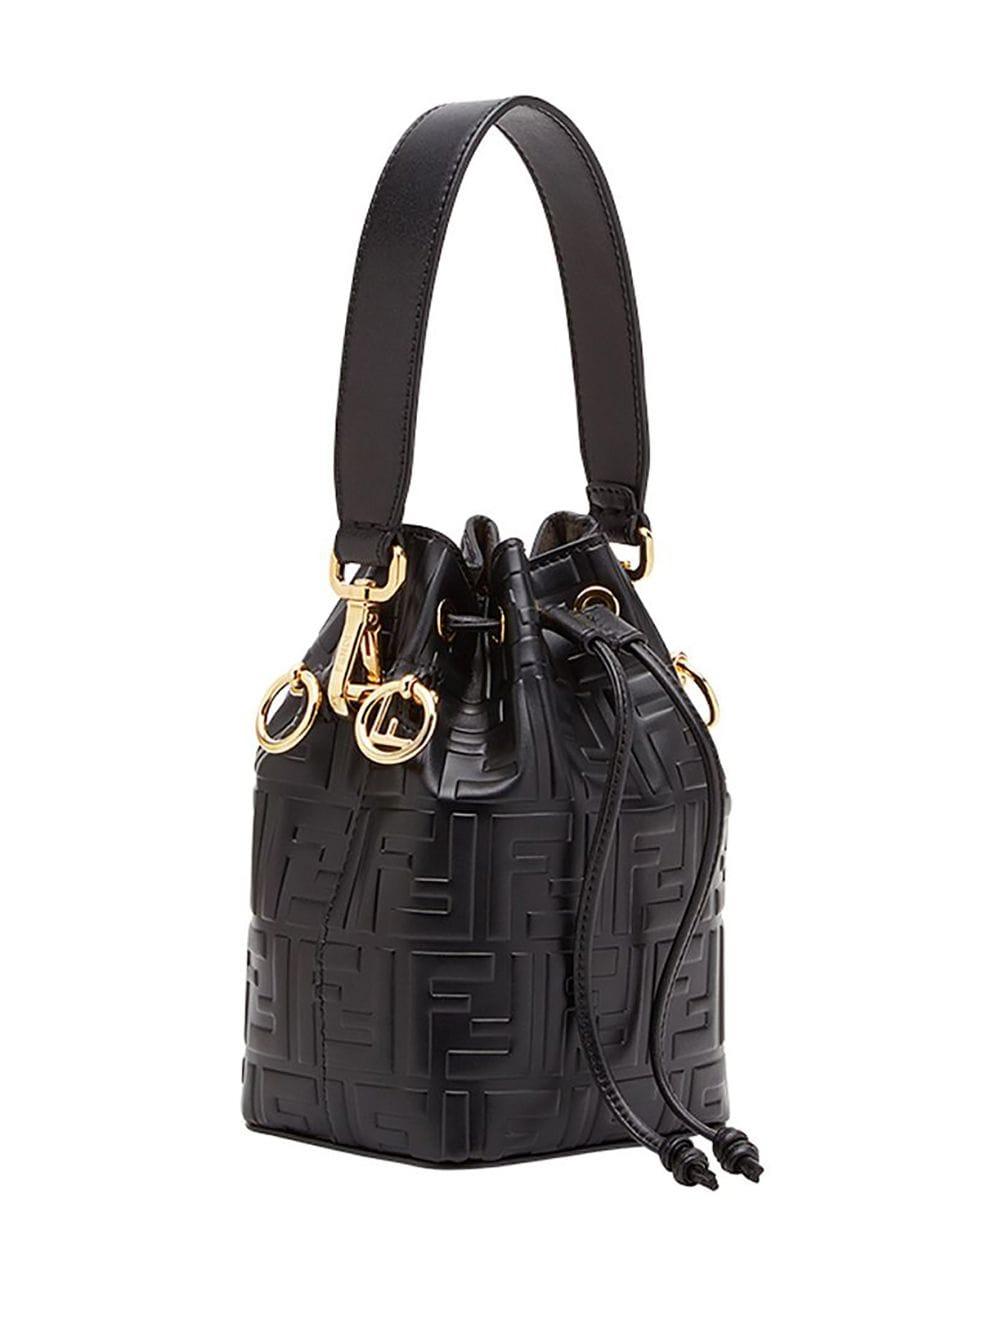 Fendi Mon Tresor Mini Leather Shoulder Bag in Black - Lyst